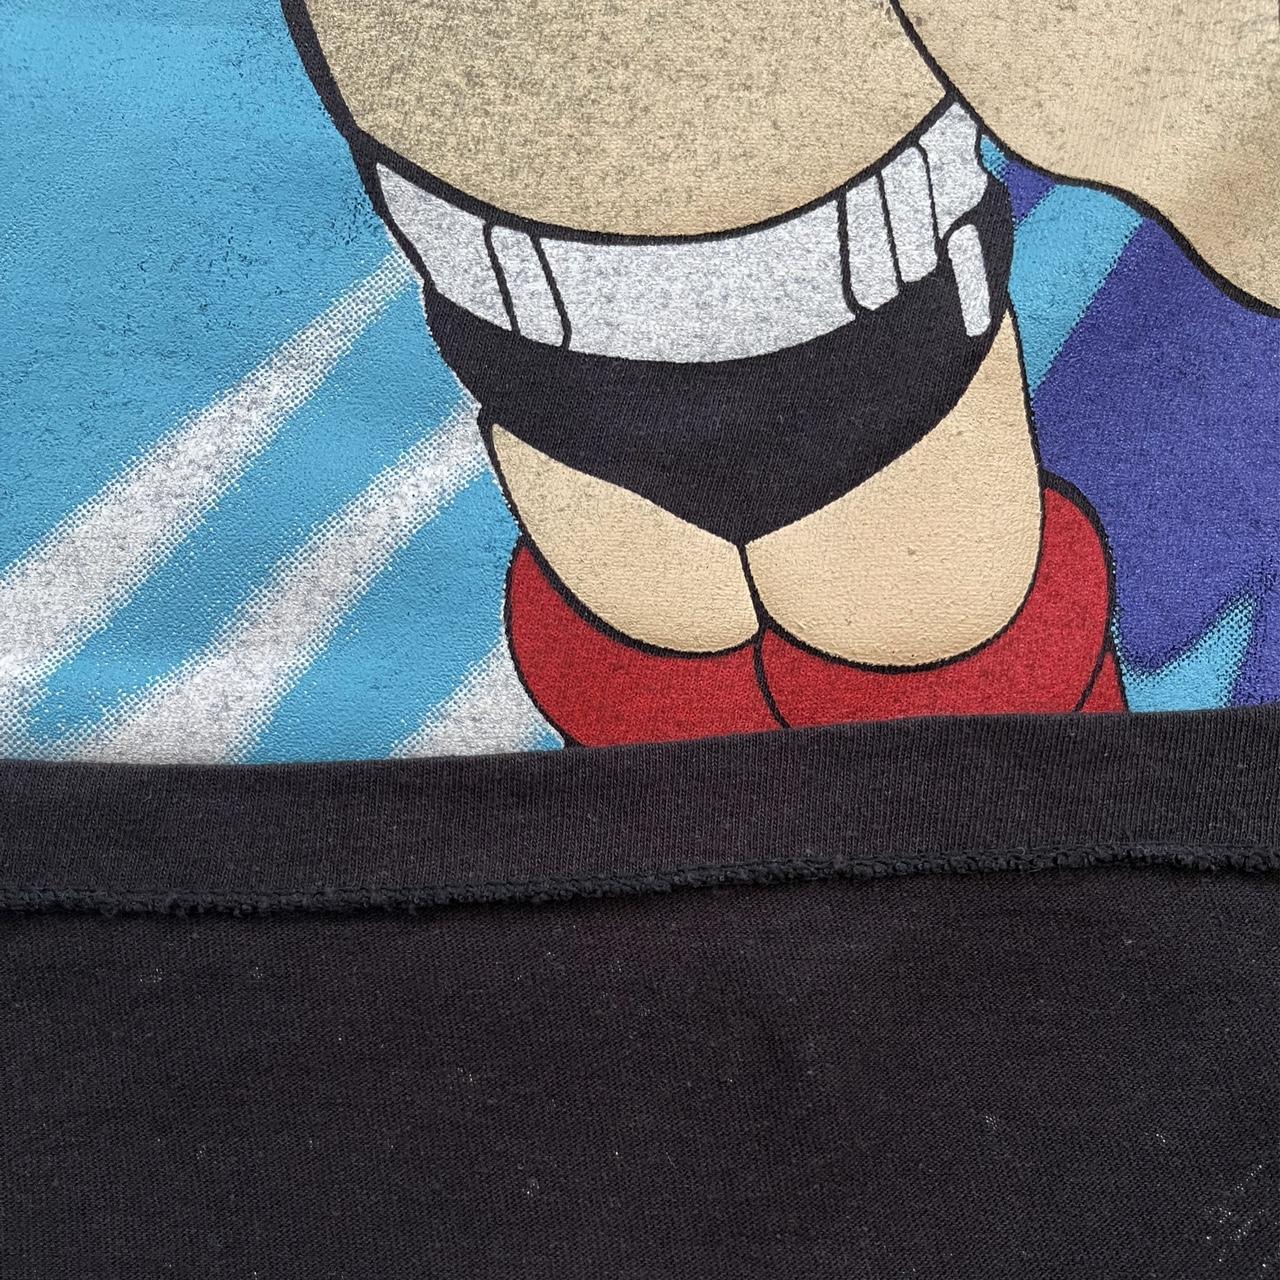 Astro Boy T-Shirt - Known Source